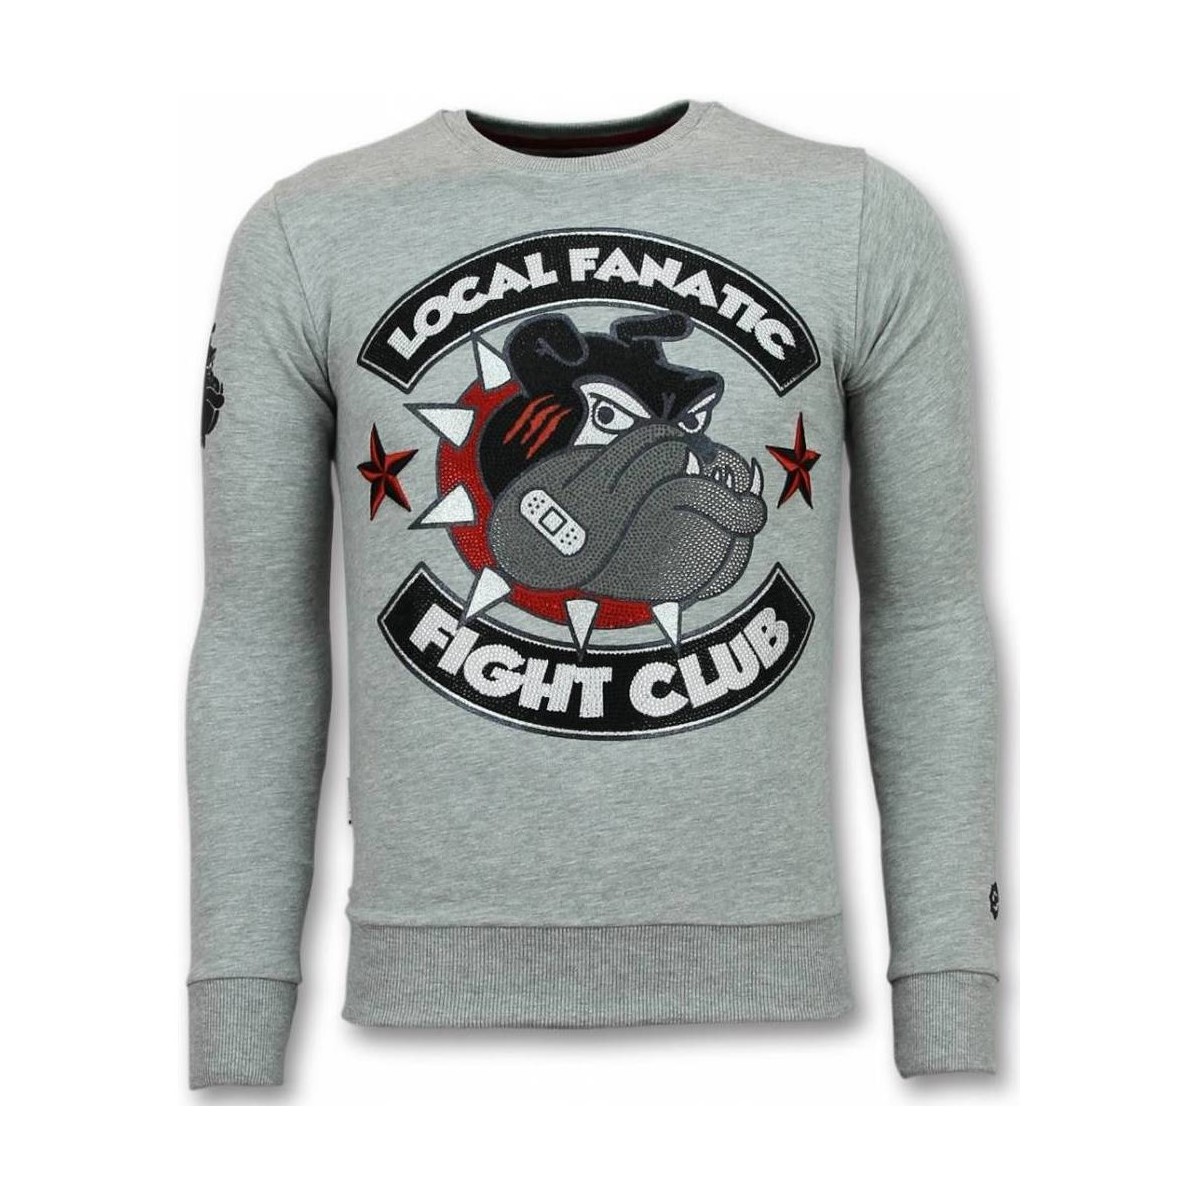 Kleidung Herren Sweatshirts Local Fanatic Fight Club Bulldog Spike Grau